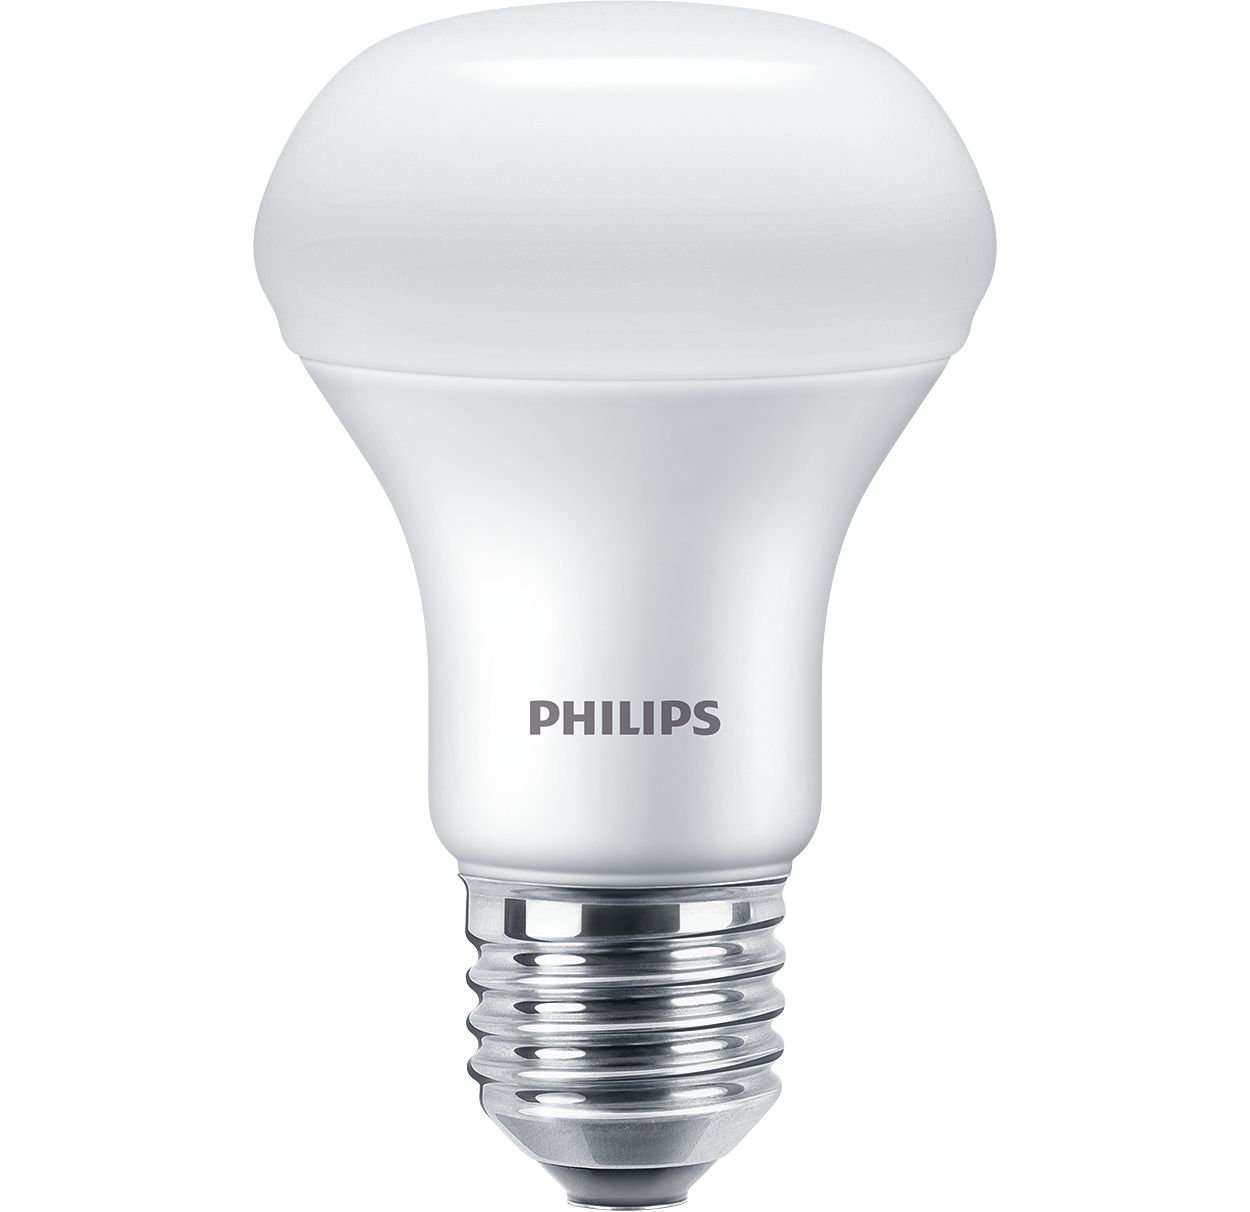 Persona boeren R ESS LEDspot 9W 980lm E27 R63 840 | 929002965987 | Philips lighting